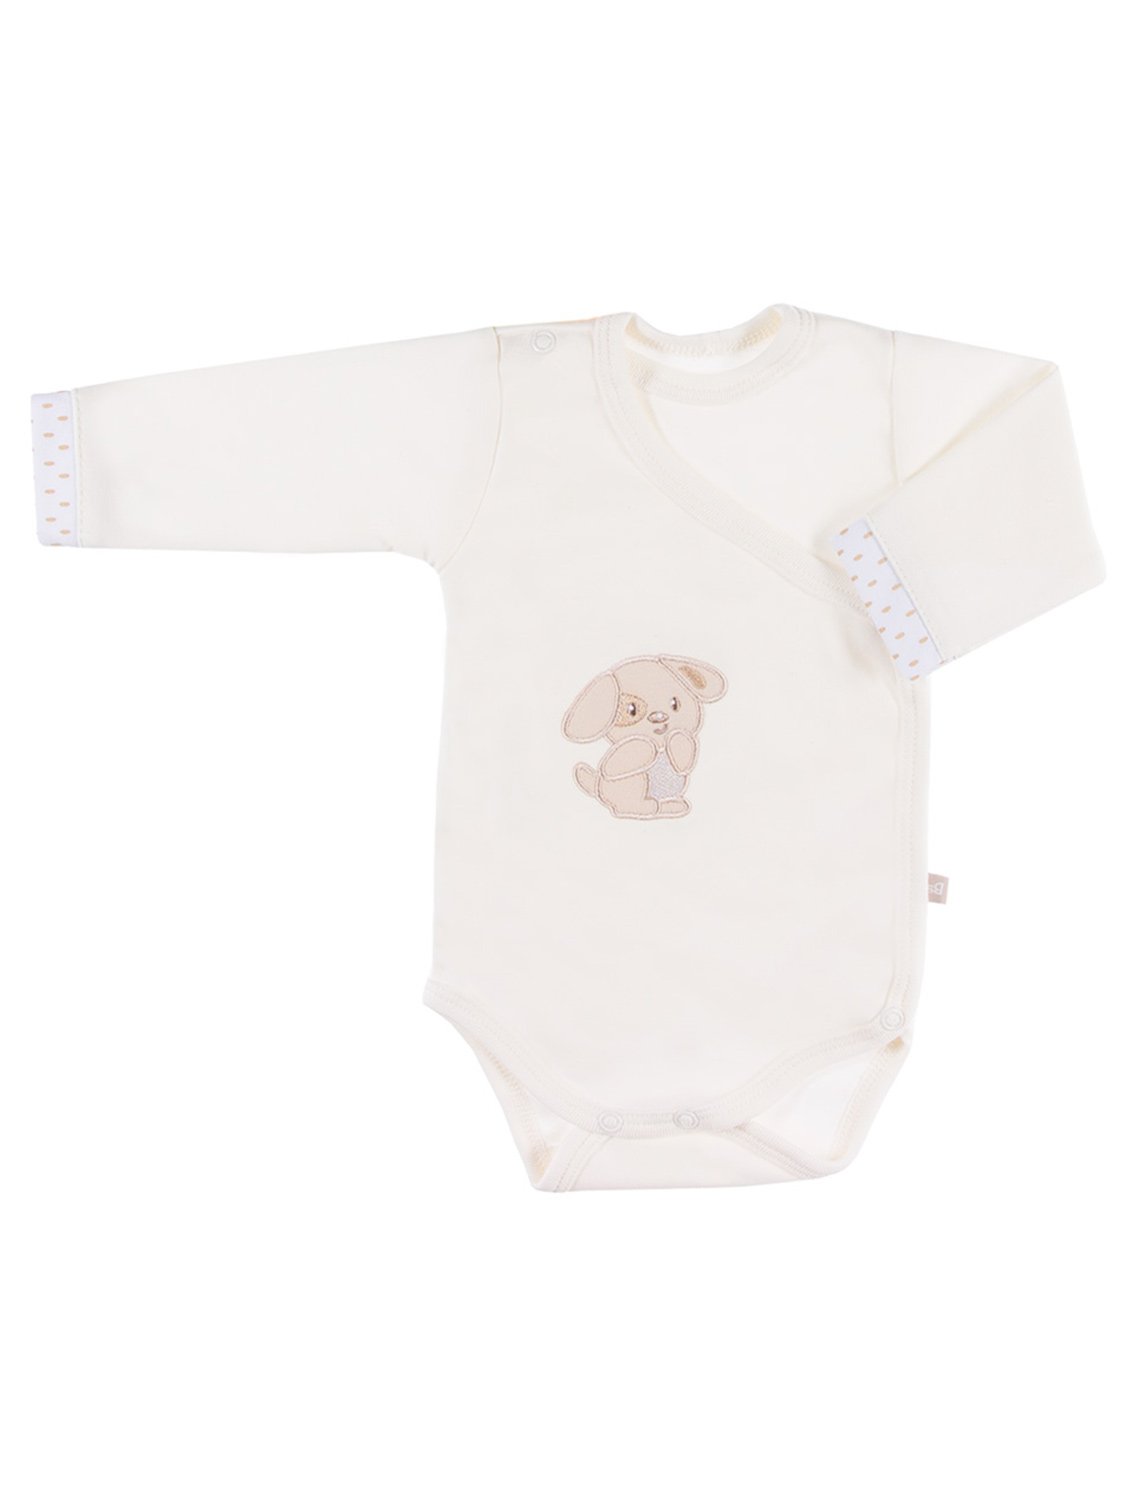 Early Baby Bodysuit, Embroidered Puppy Design - Cream - Bodysuit / Vest - EEVI